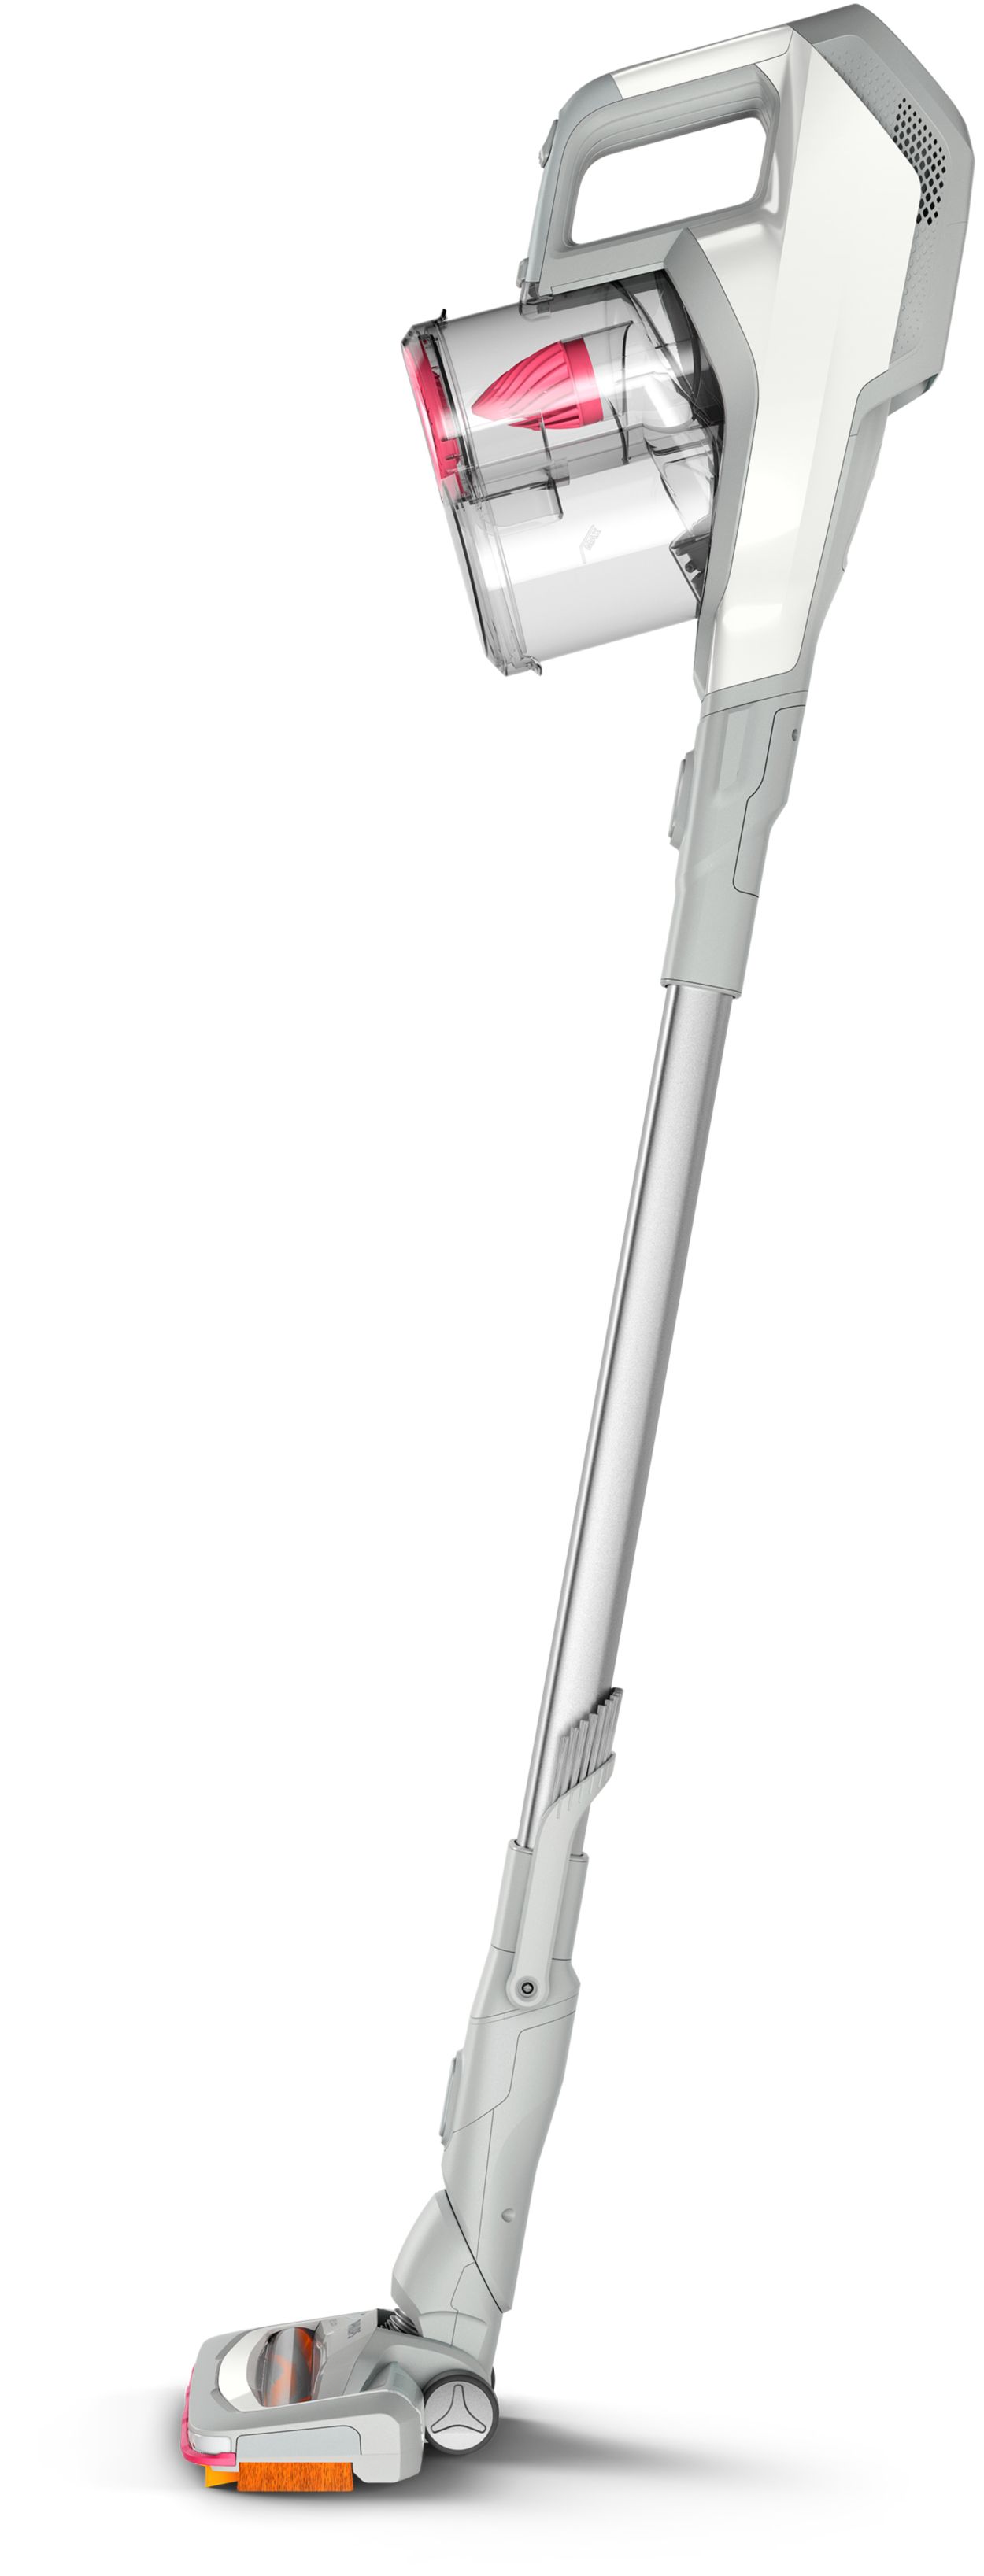 SpeedPro Aspiradora vertical sin cable FC6723/01